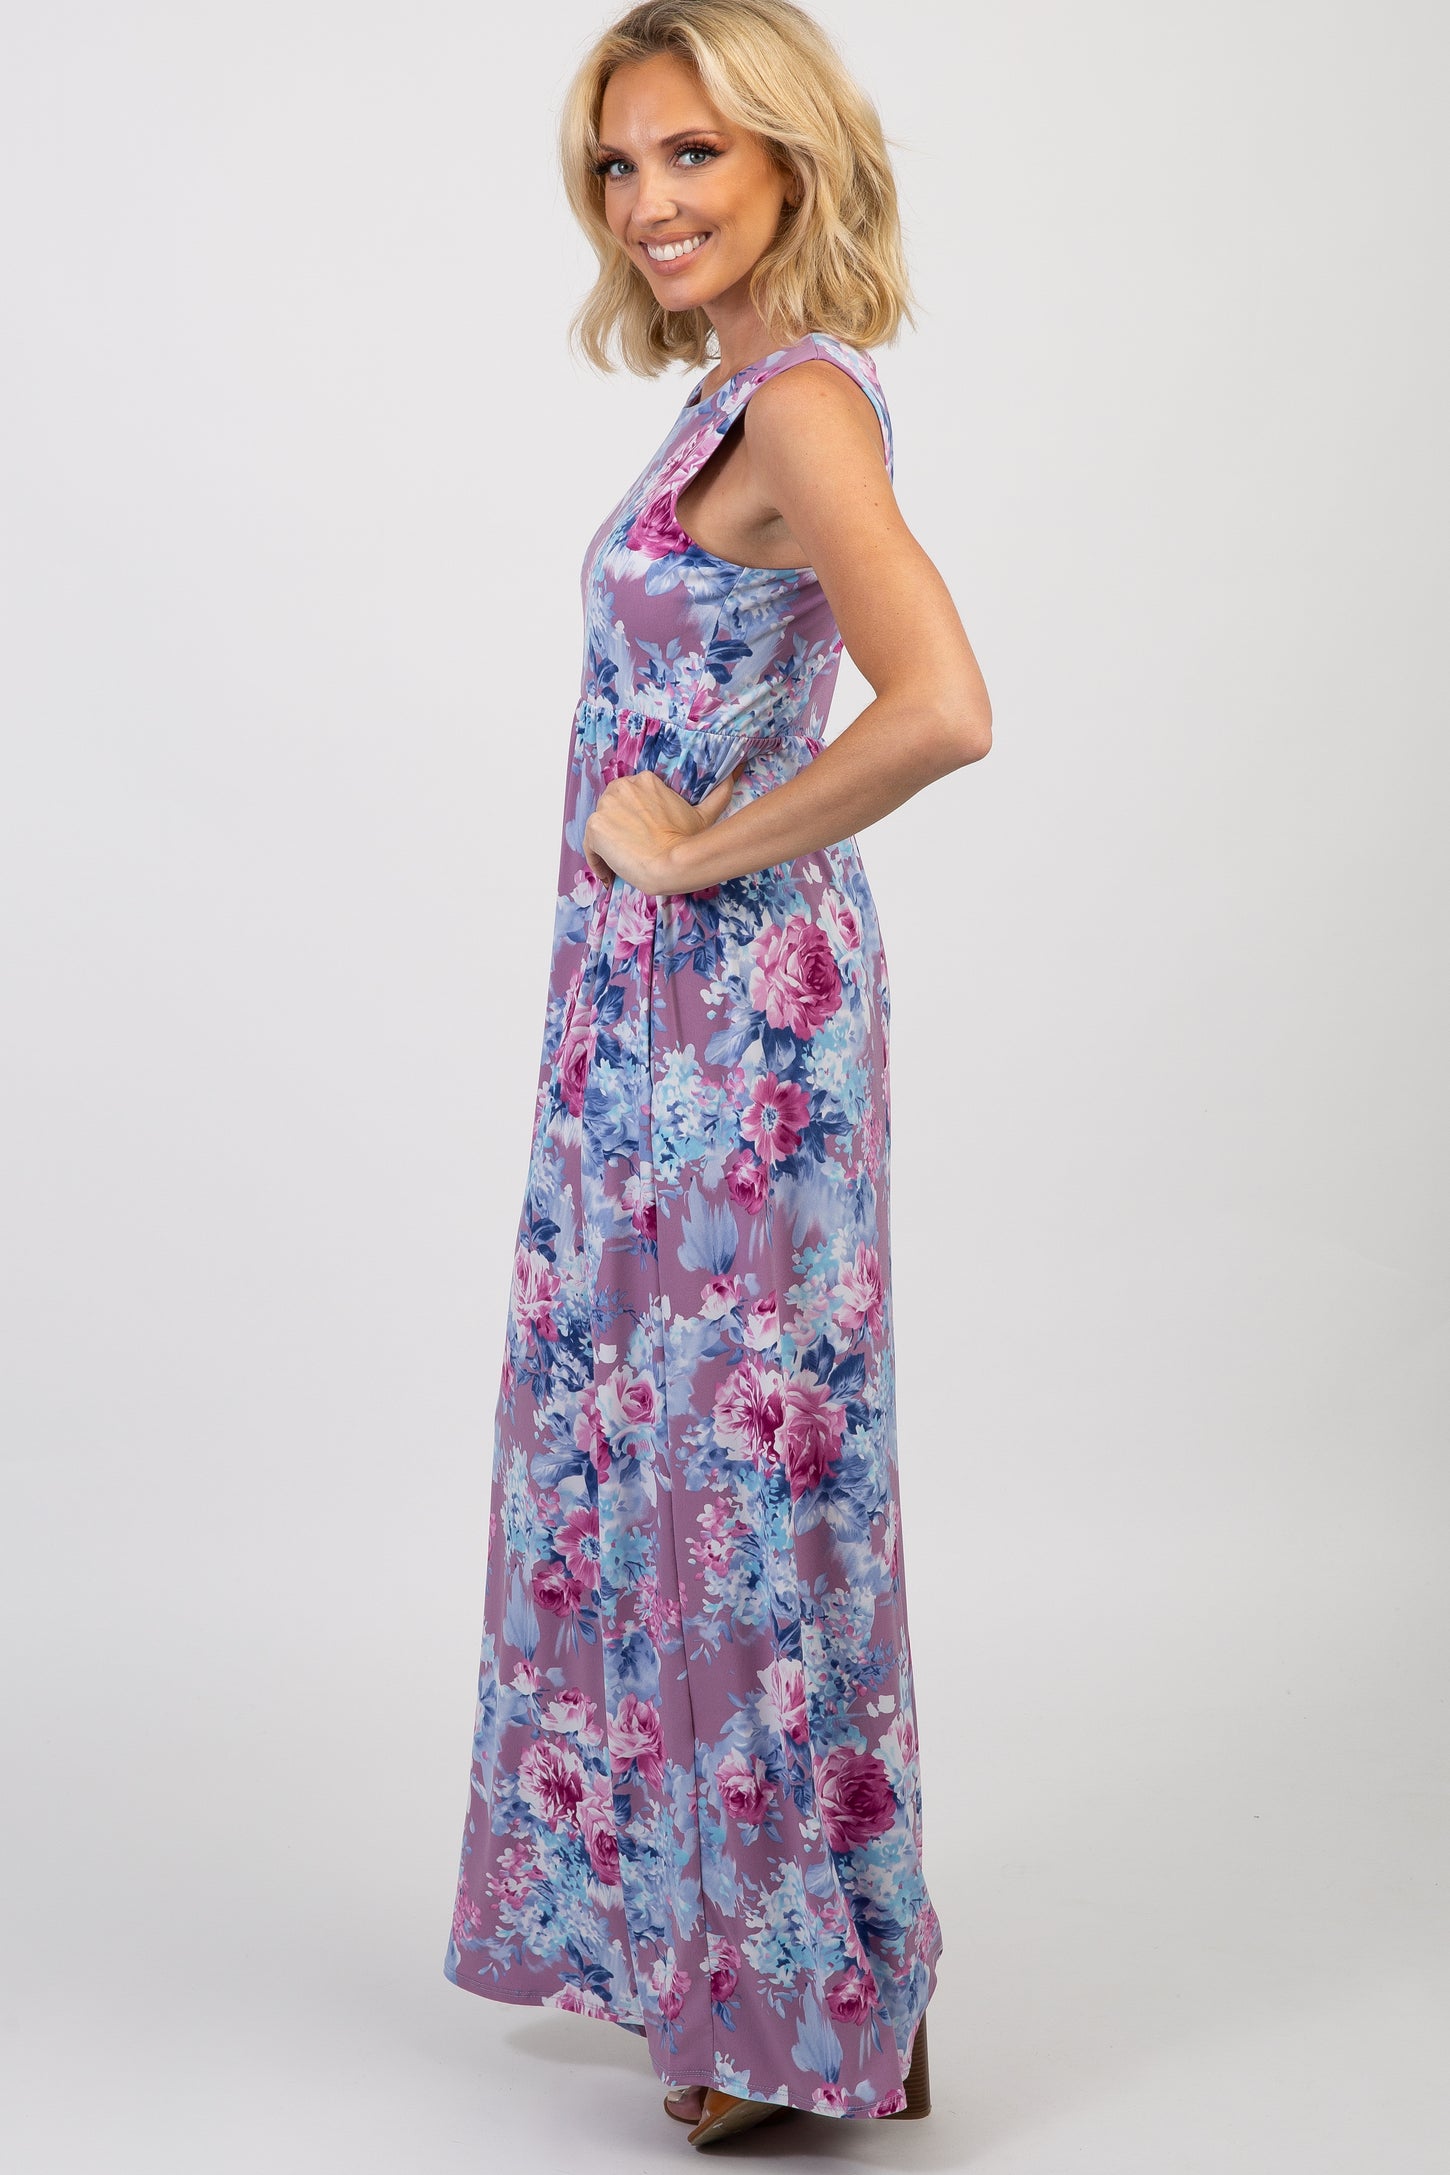 PinkBlush Lavender Floral Sleeveless Maxi Dress